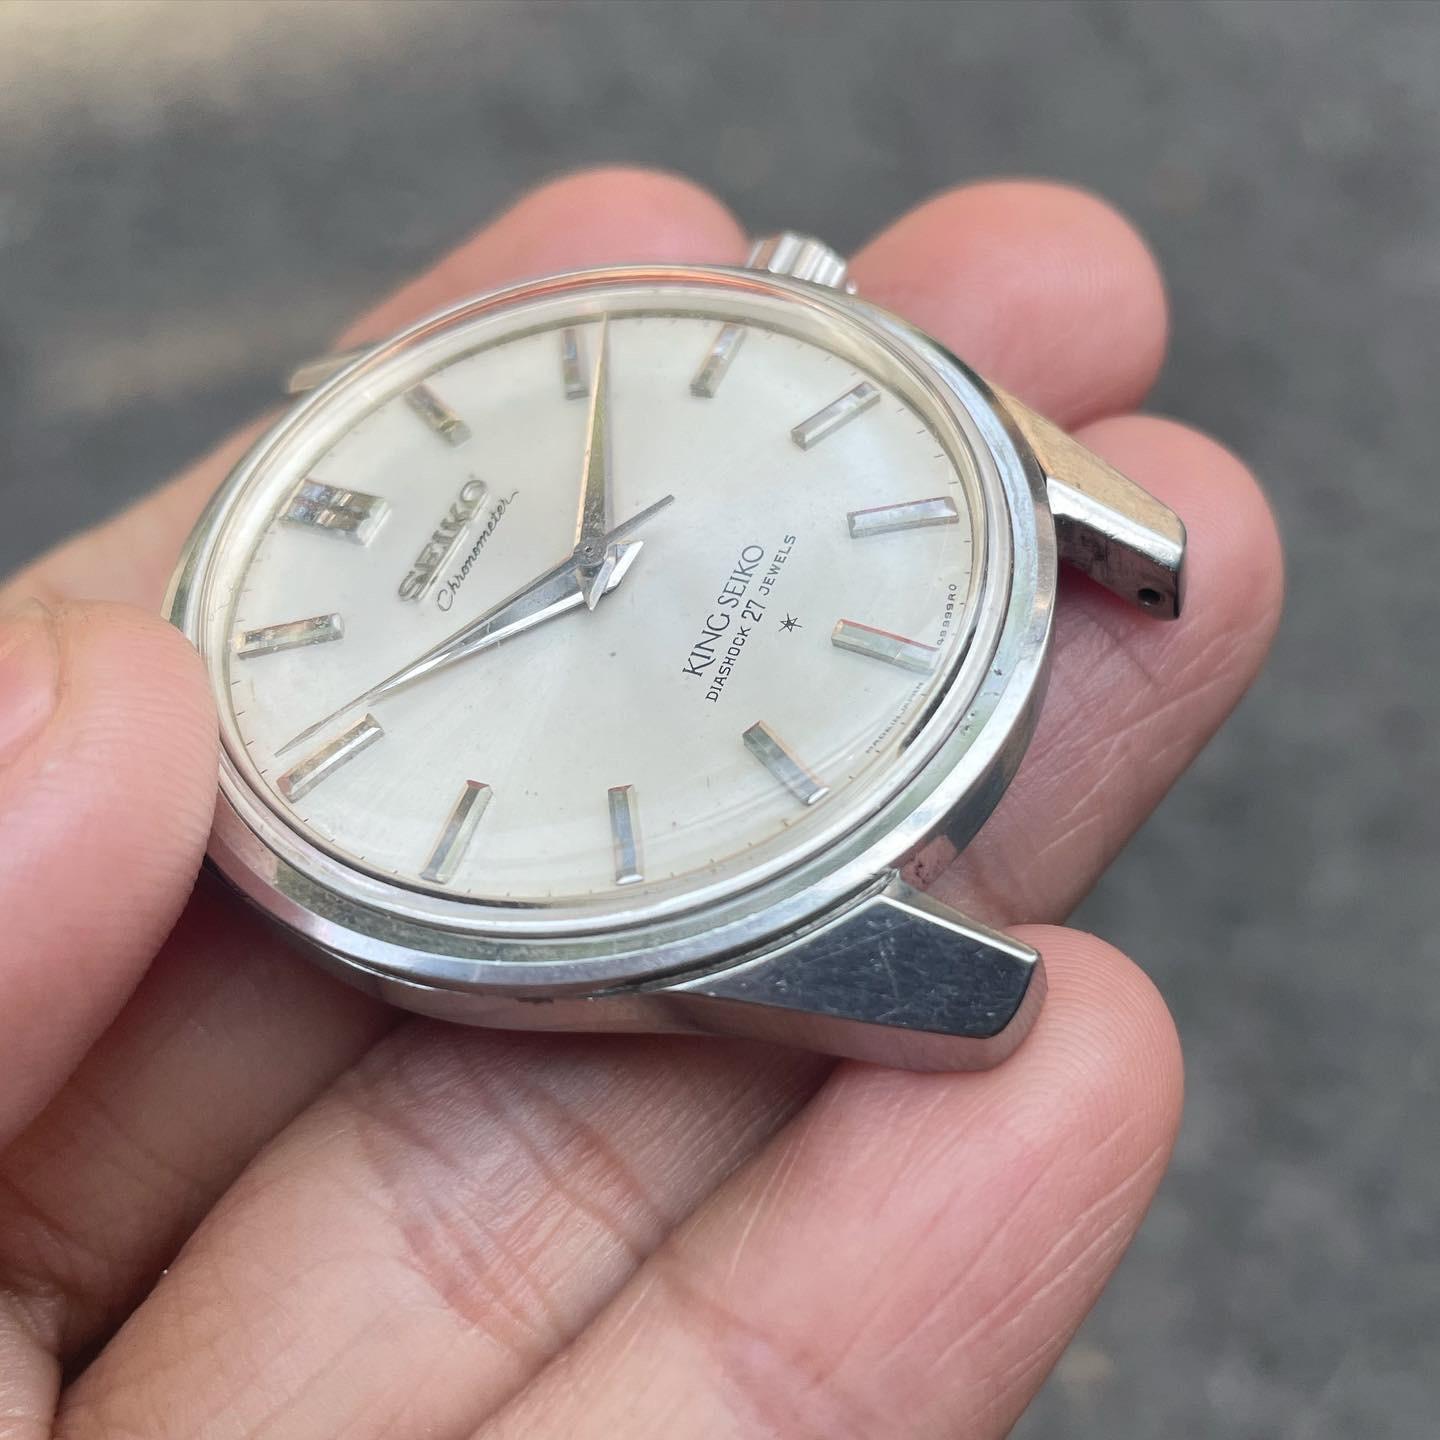 999 USD] FS: King Seiko Chronometer hand windding ref 49999 | WatchCharts